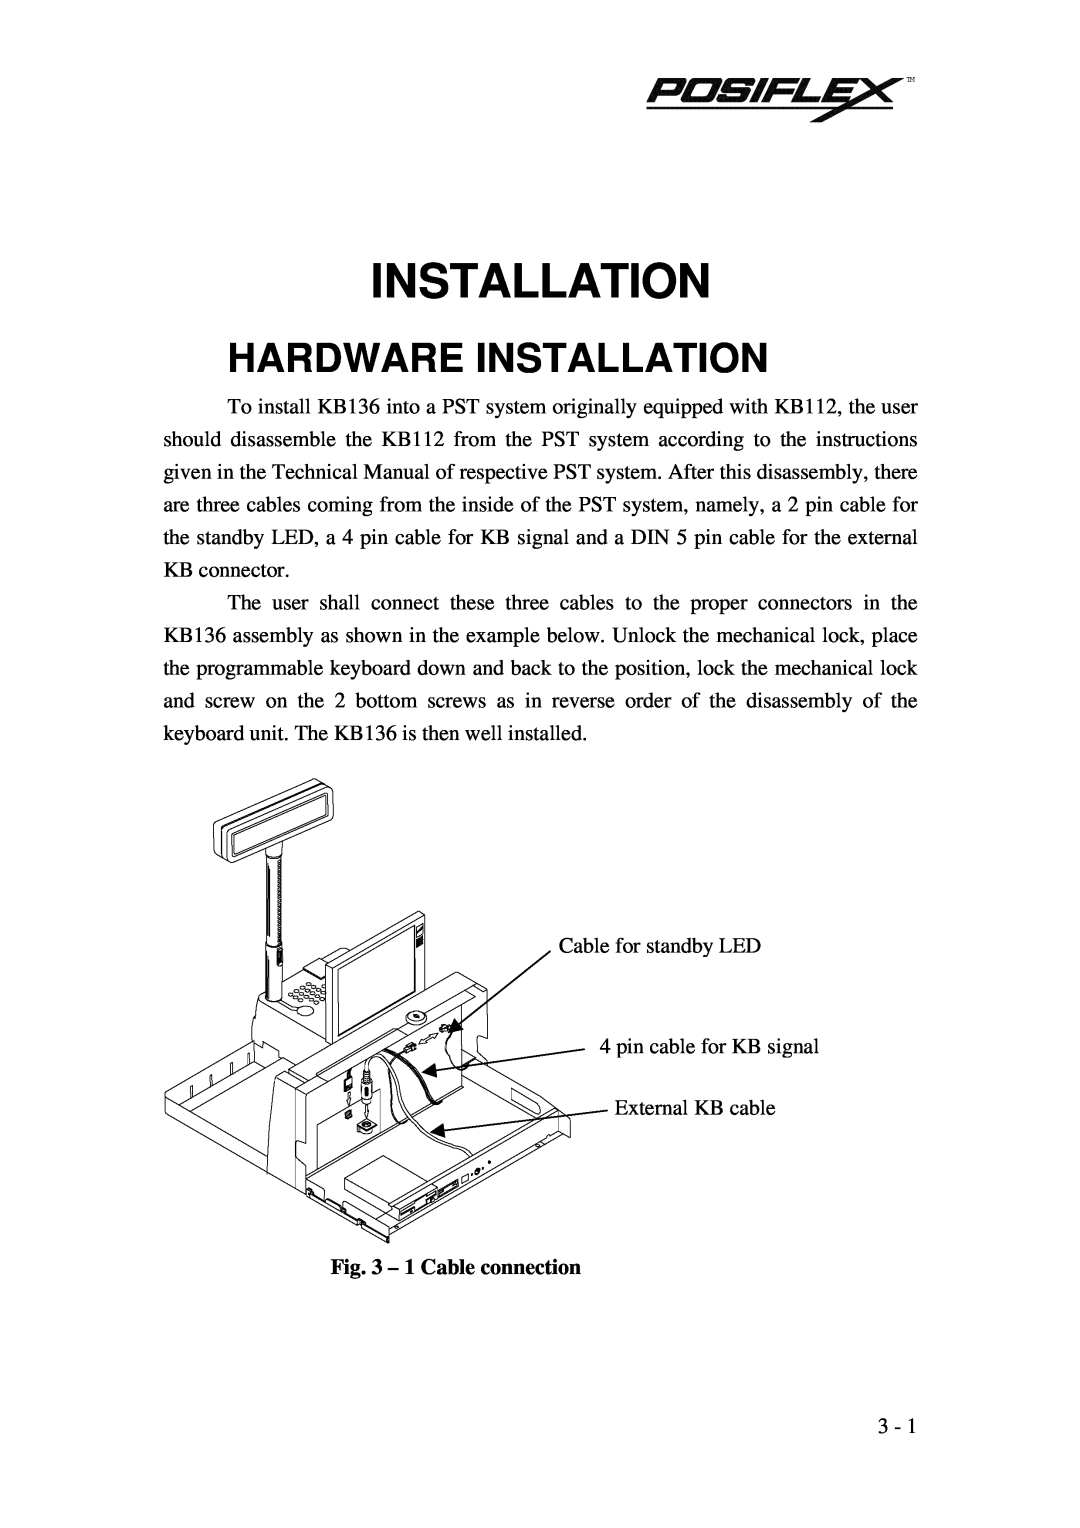 POSIFLEX Business Machines PST KB136 manual Hardware Installation 